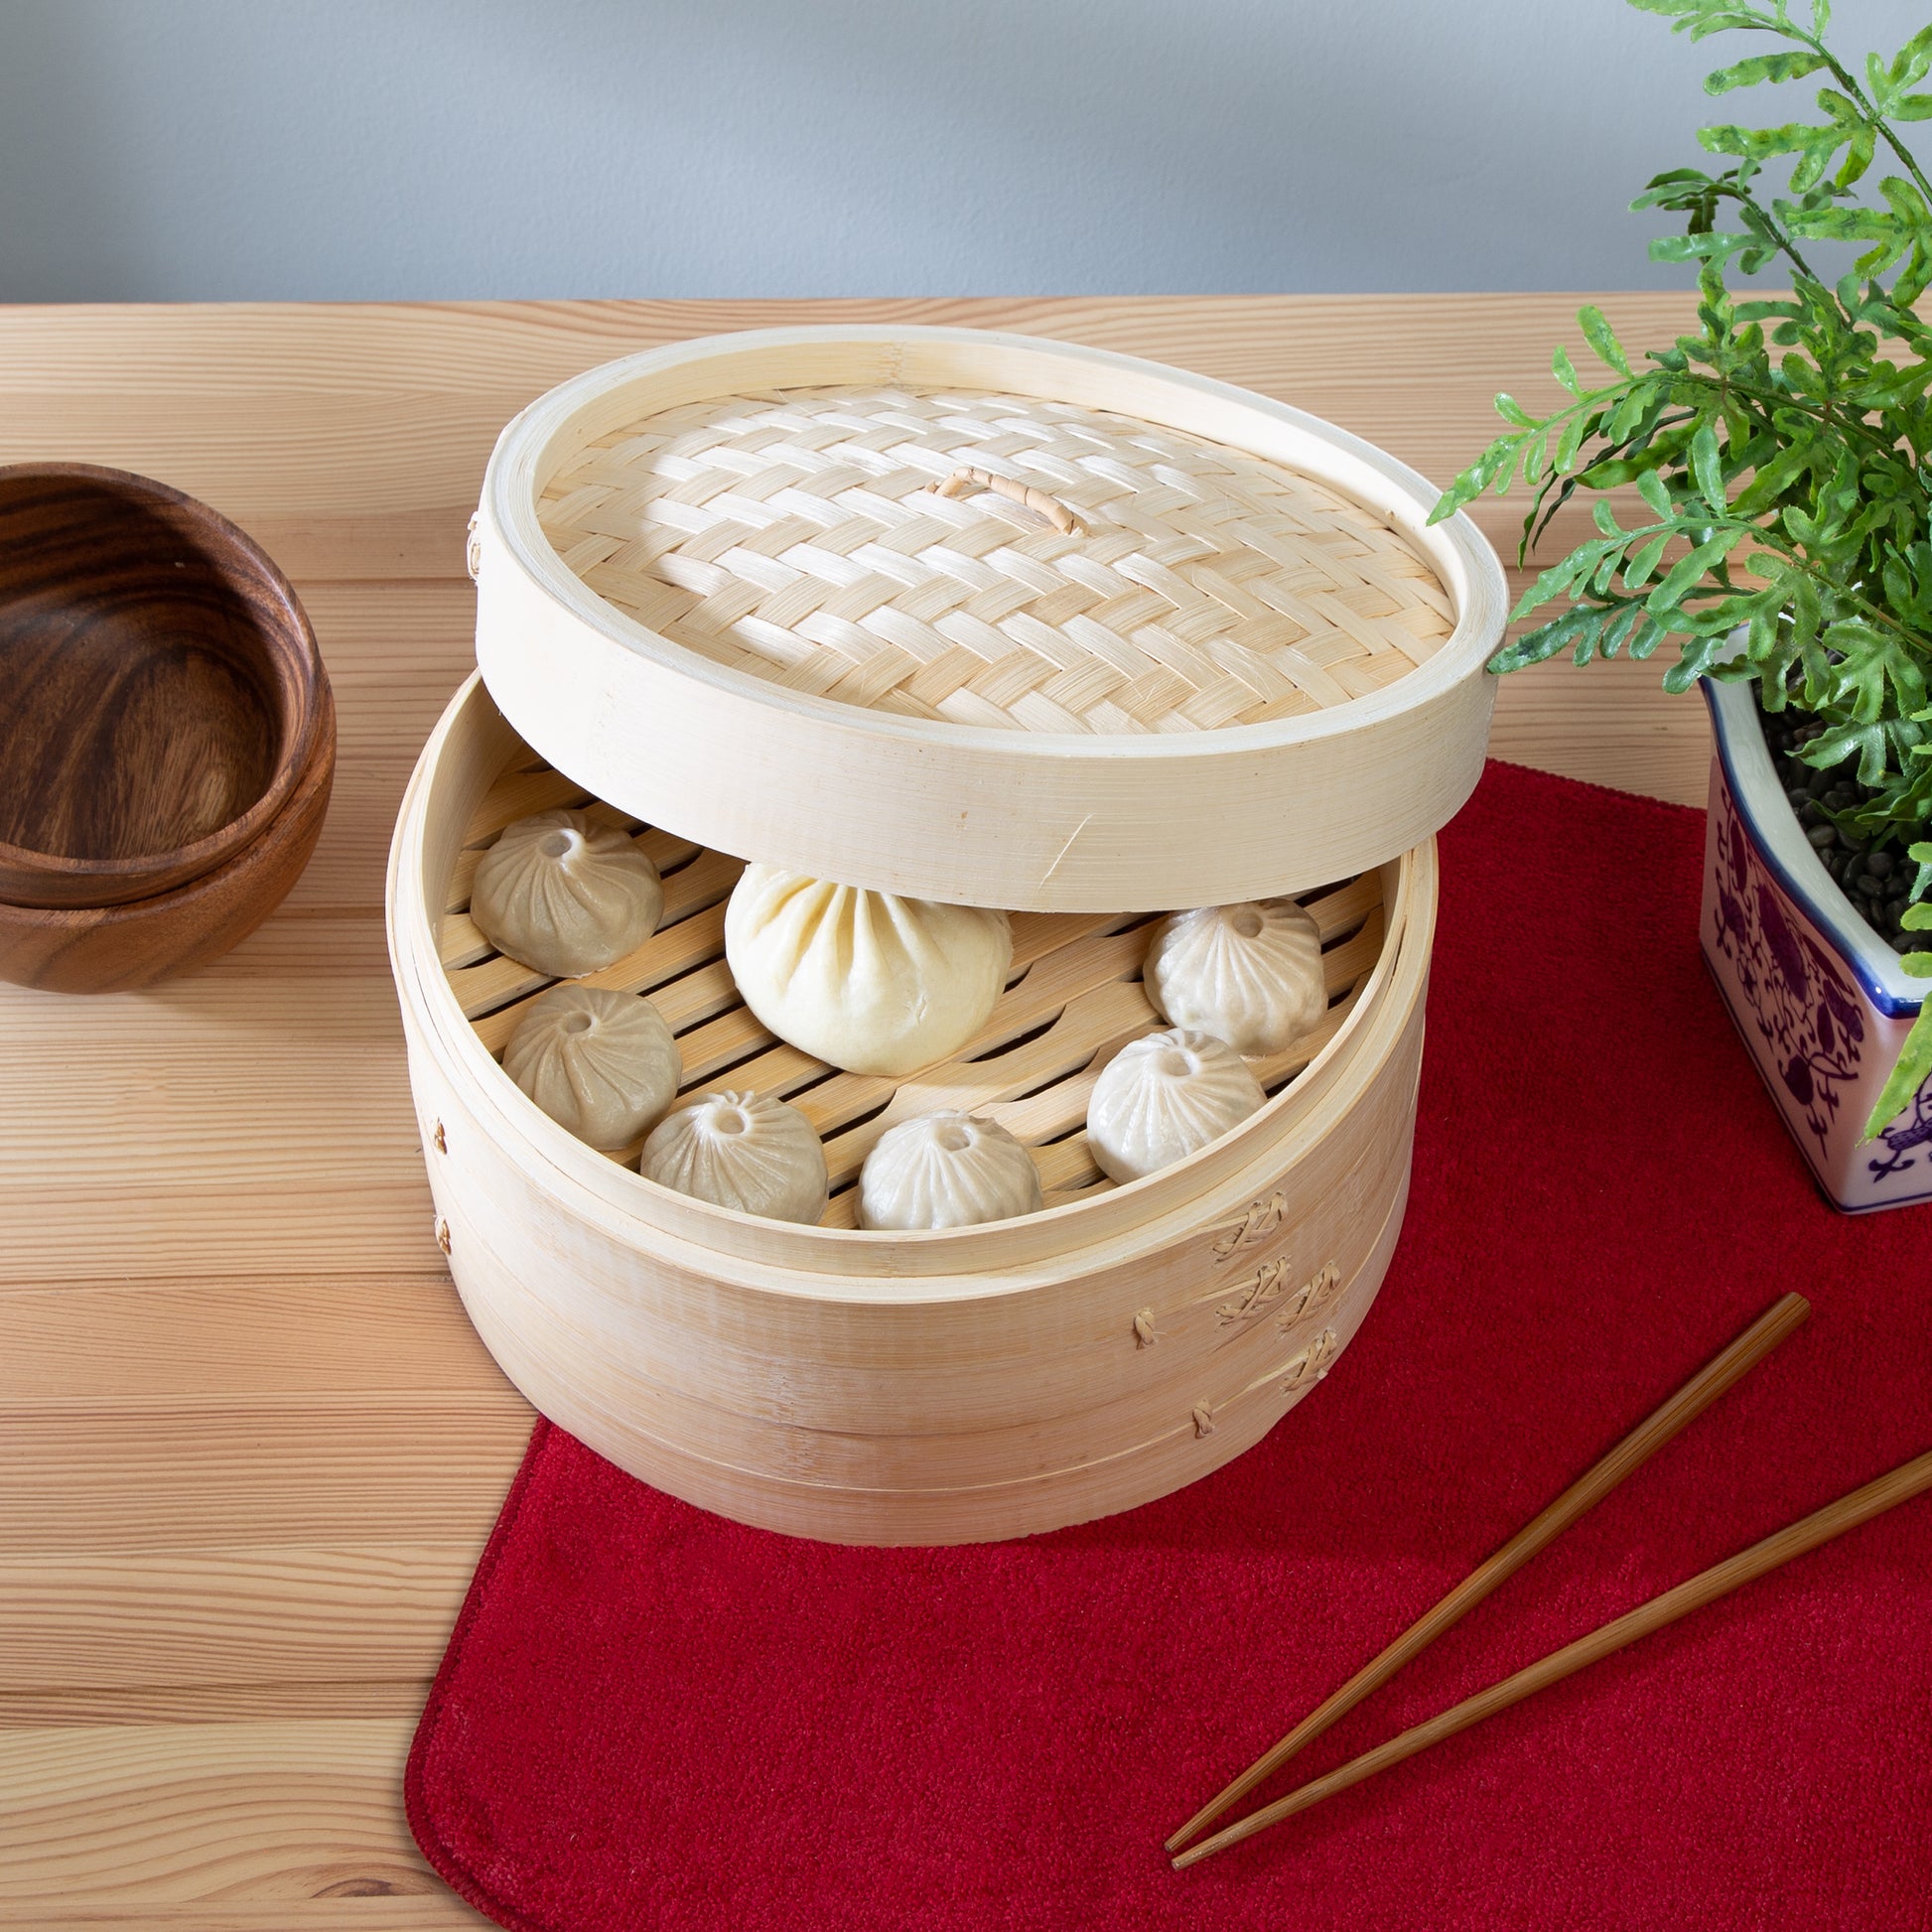 2-Tier 10 Inch Bamboo Steamer Basket with Steel Rings - Large Capacity  Dumpling, Vegetable Steamer Basket (10x6.5x10 In)